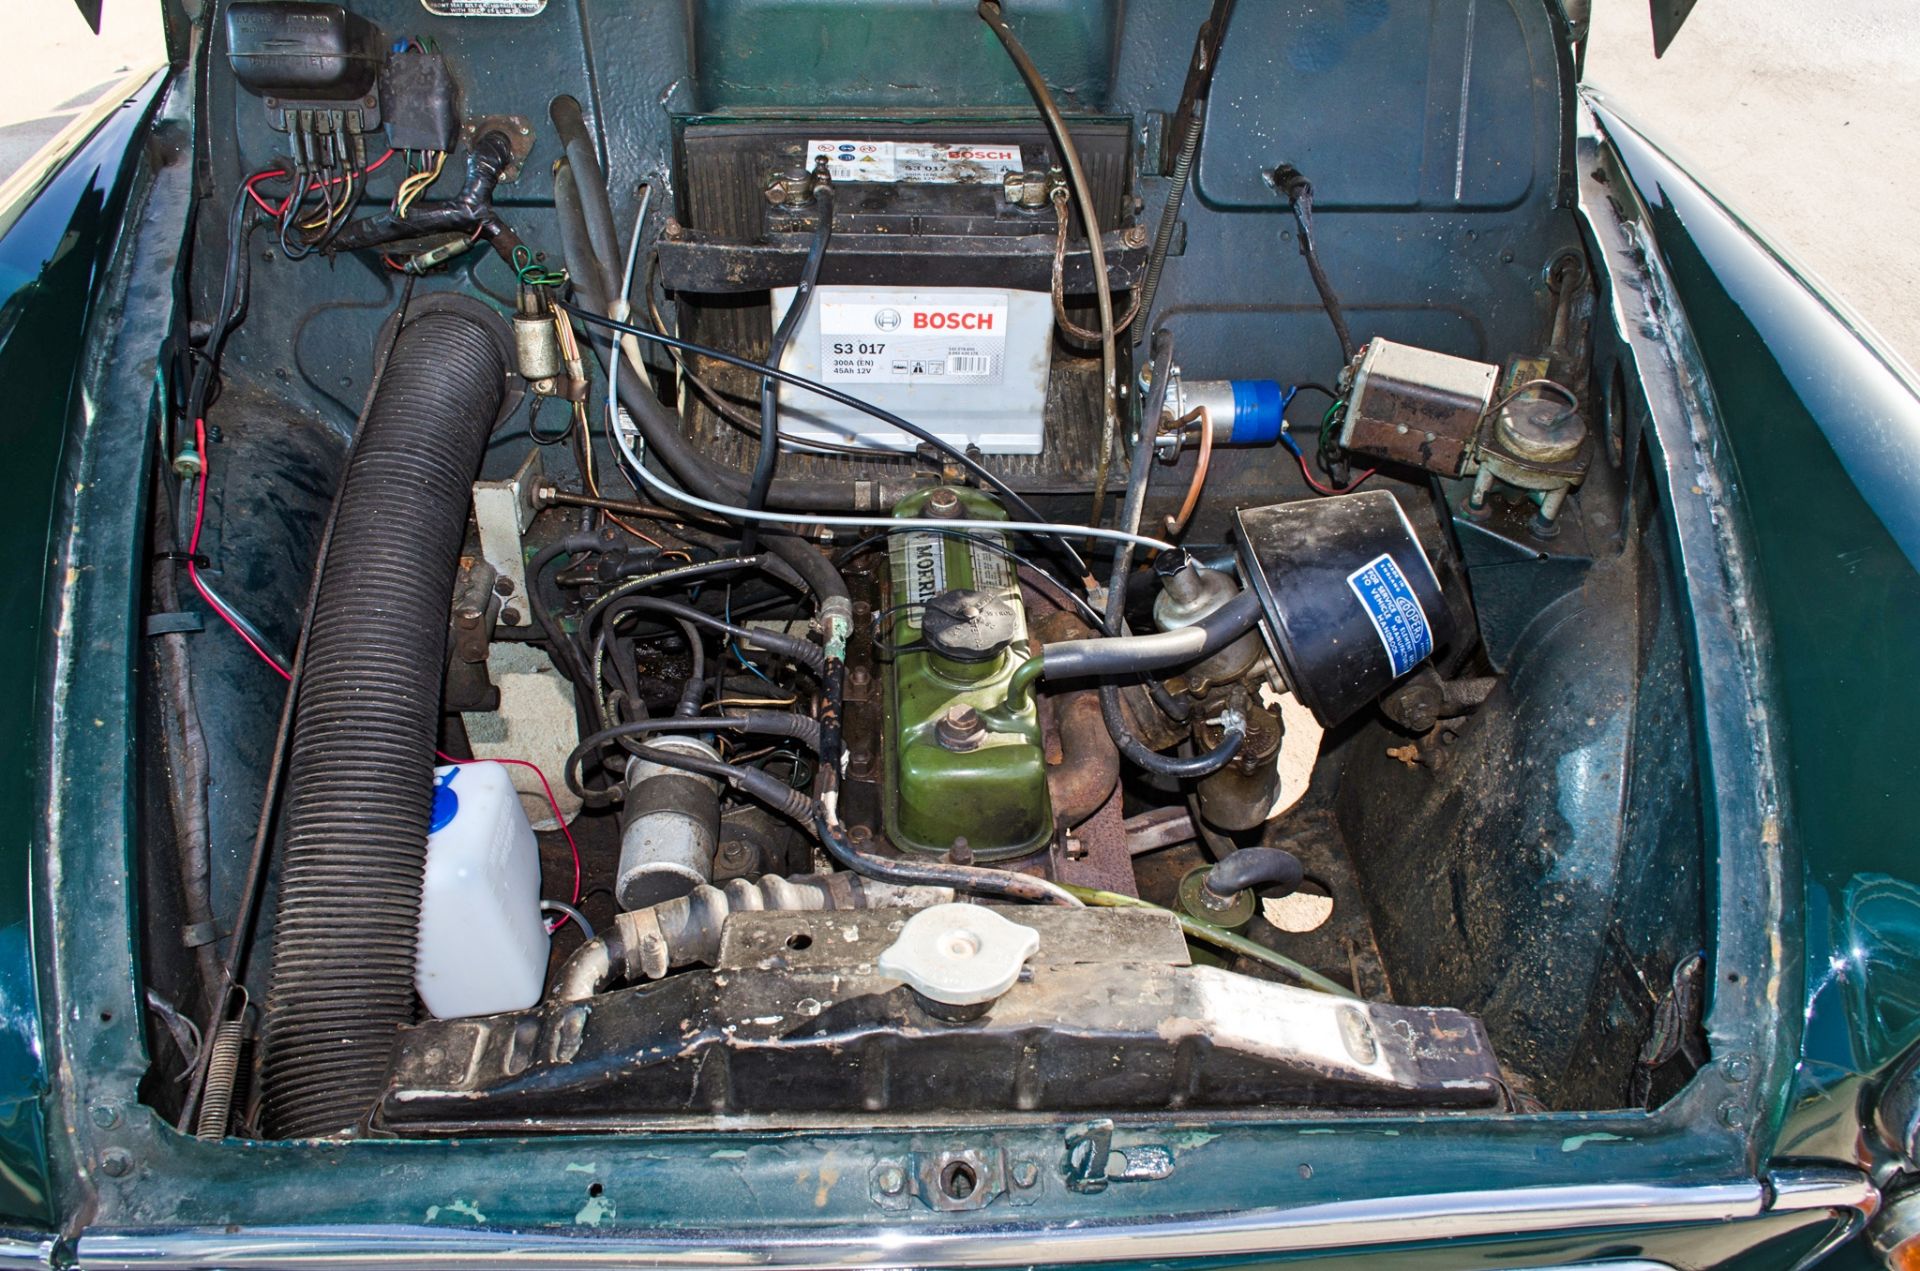 1968 Morris Minor 1000 1098cc series V 2 door convertible - Image 47 of 58